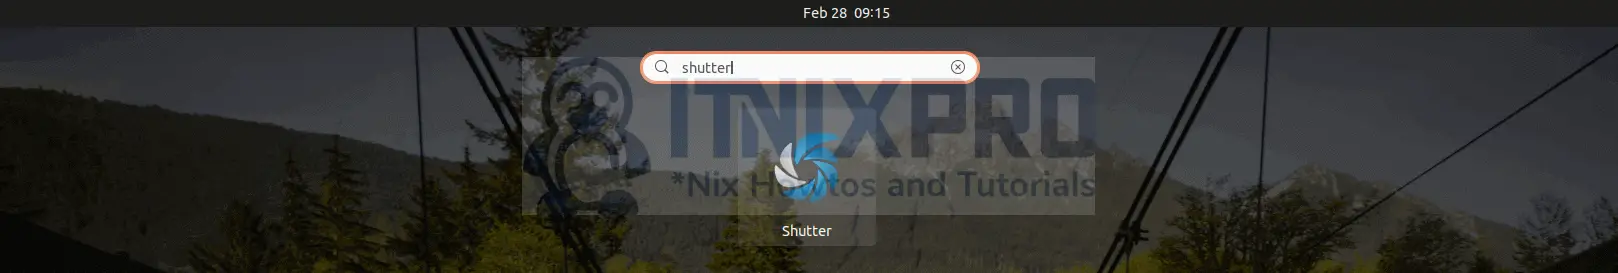 Install Shutter Screenshot on Ubuntu 22.04